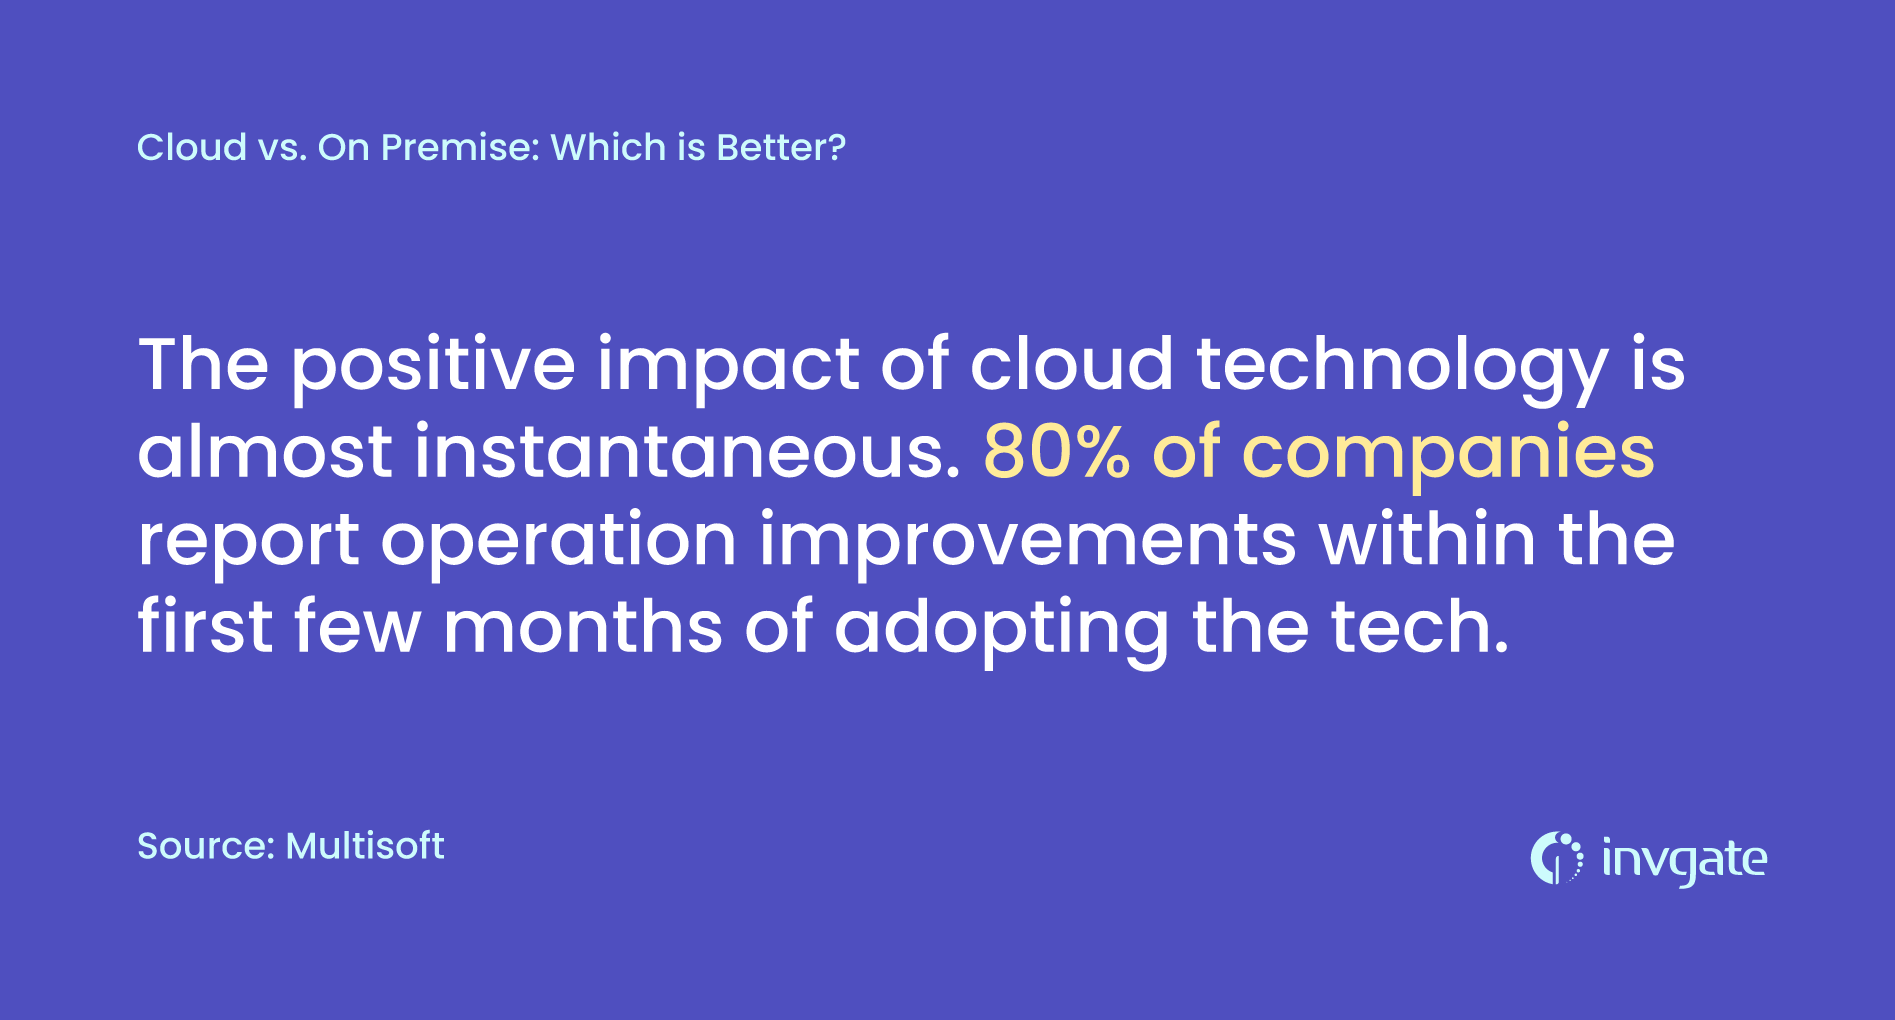 Benefits of cloud technology